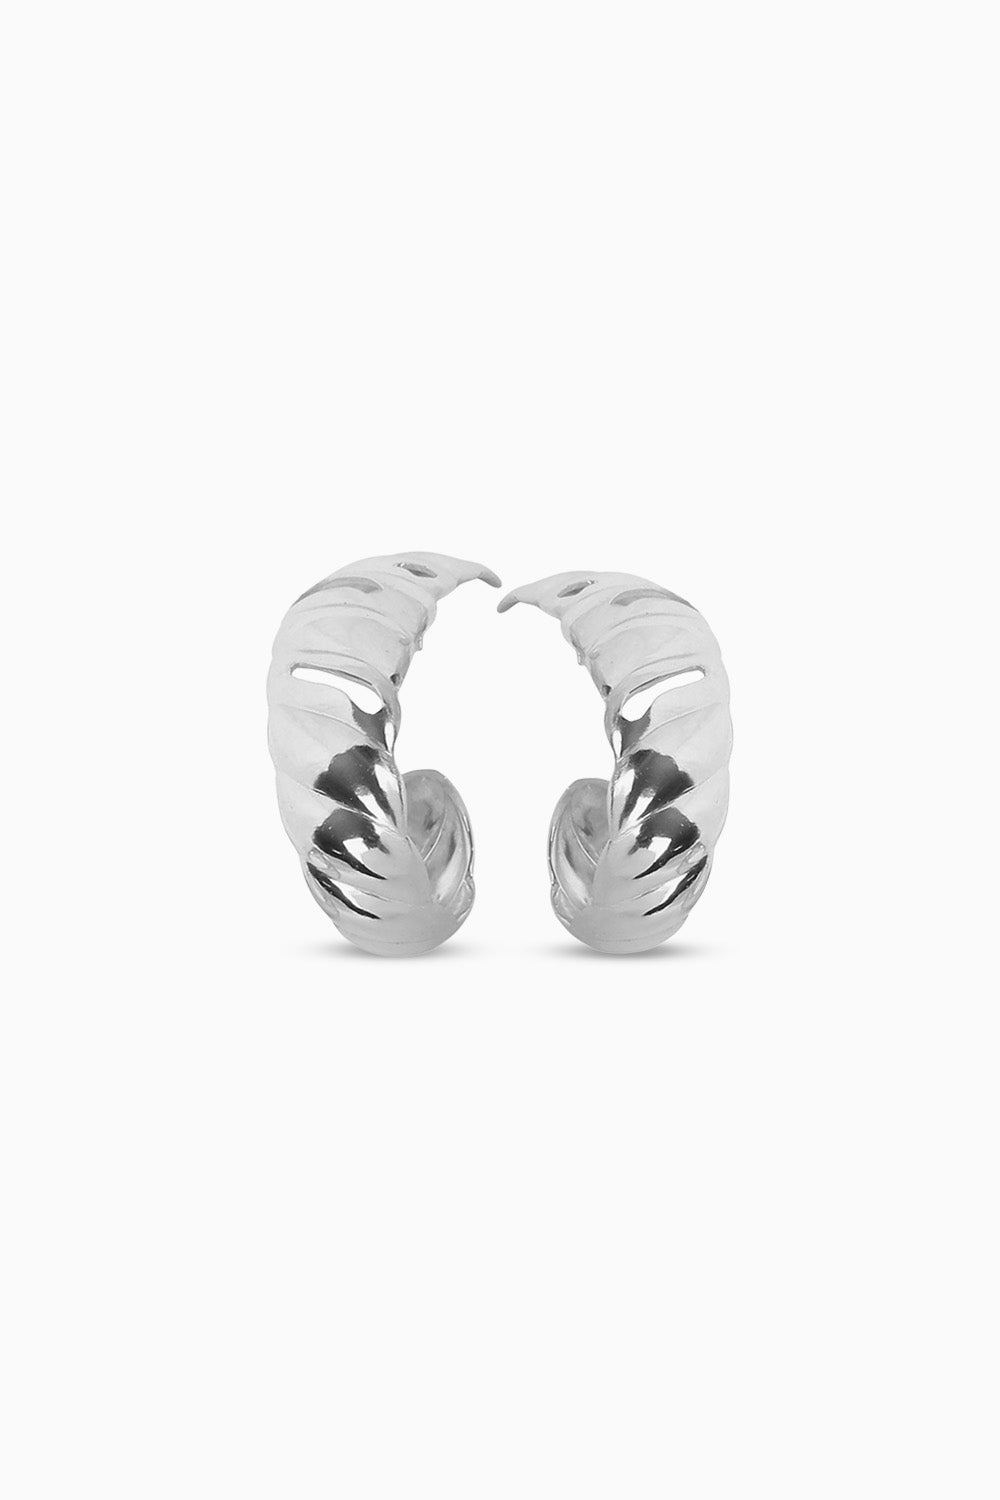 Aqua Swirl Earrings Silver Tone